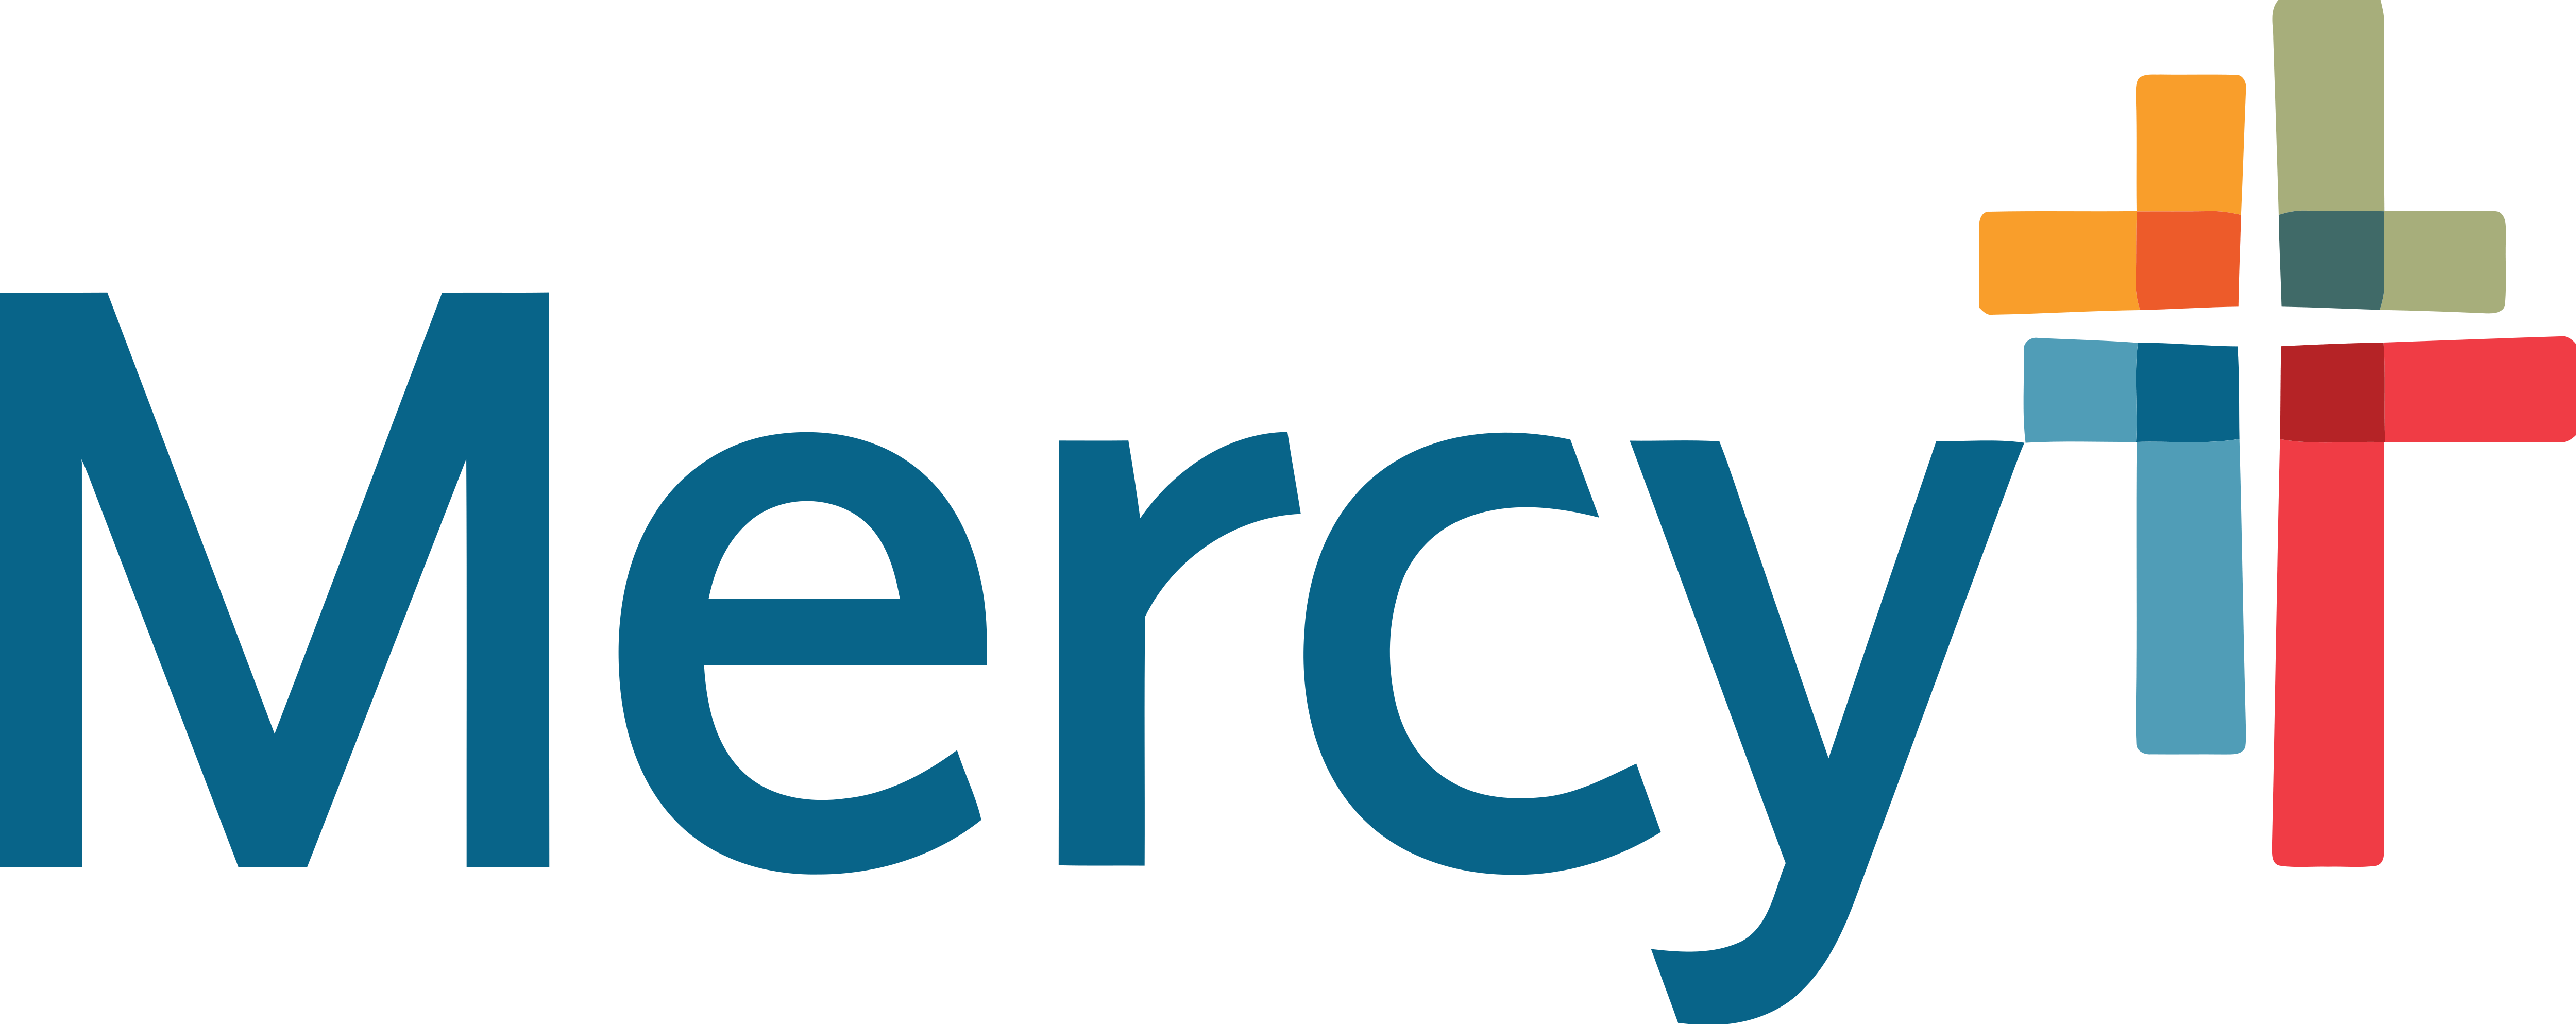 Mercy Hospital Logo - Breast Cancer Foundation of the Ozarks